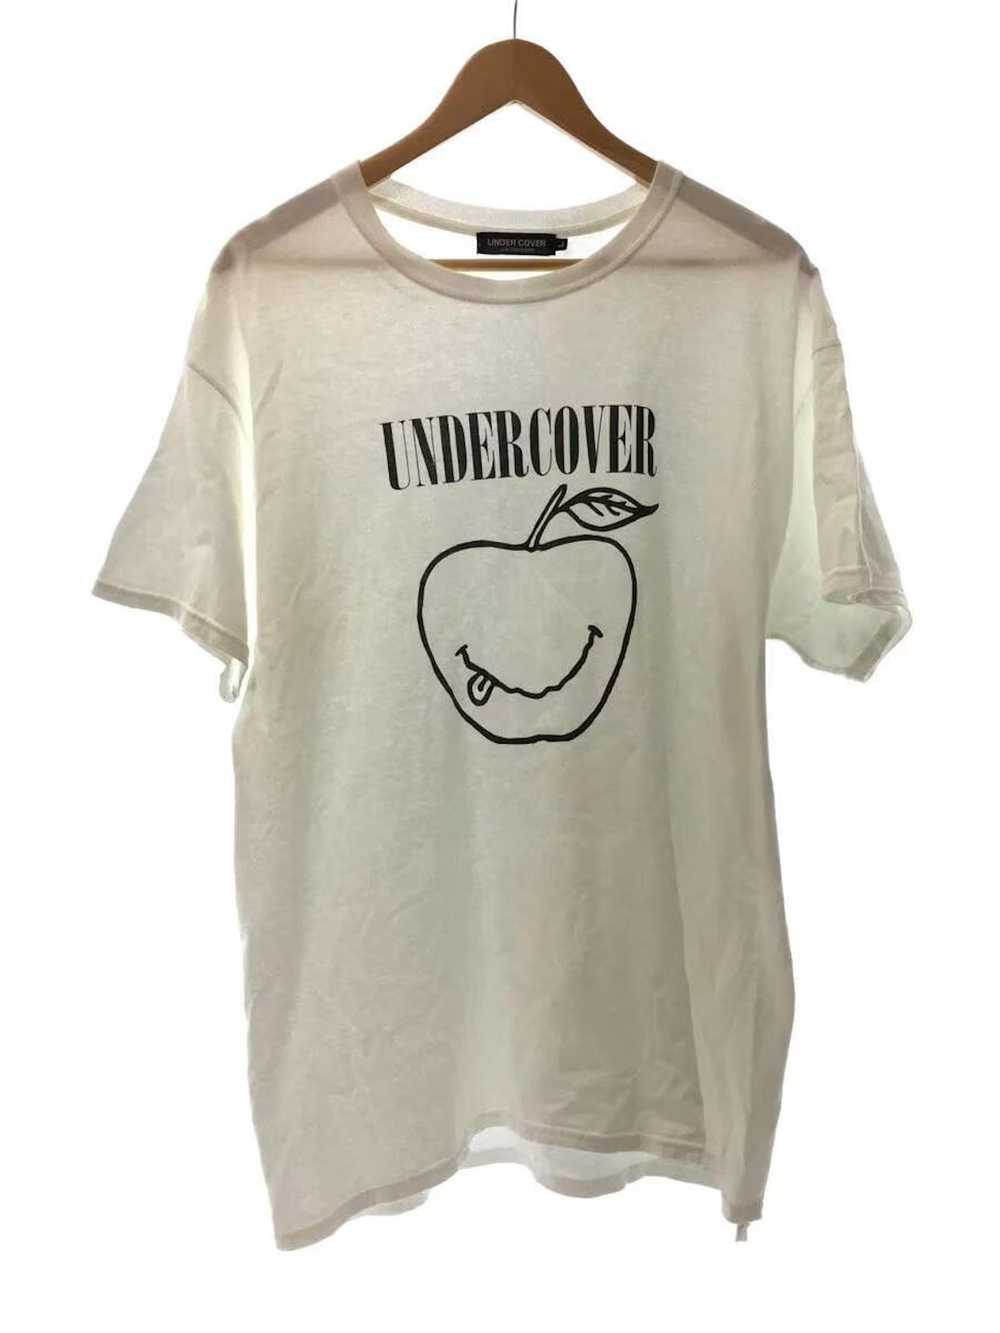 Undercover Nirvana Apple Tee - image 1